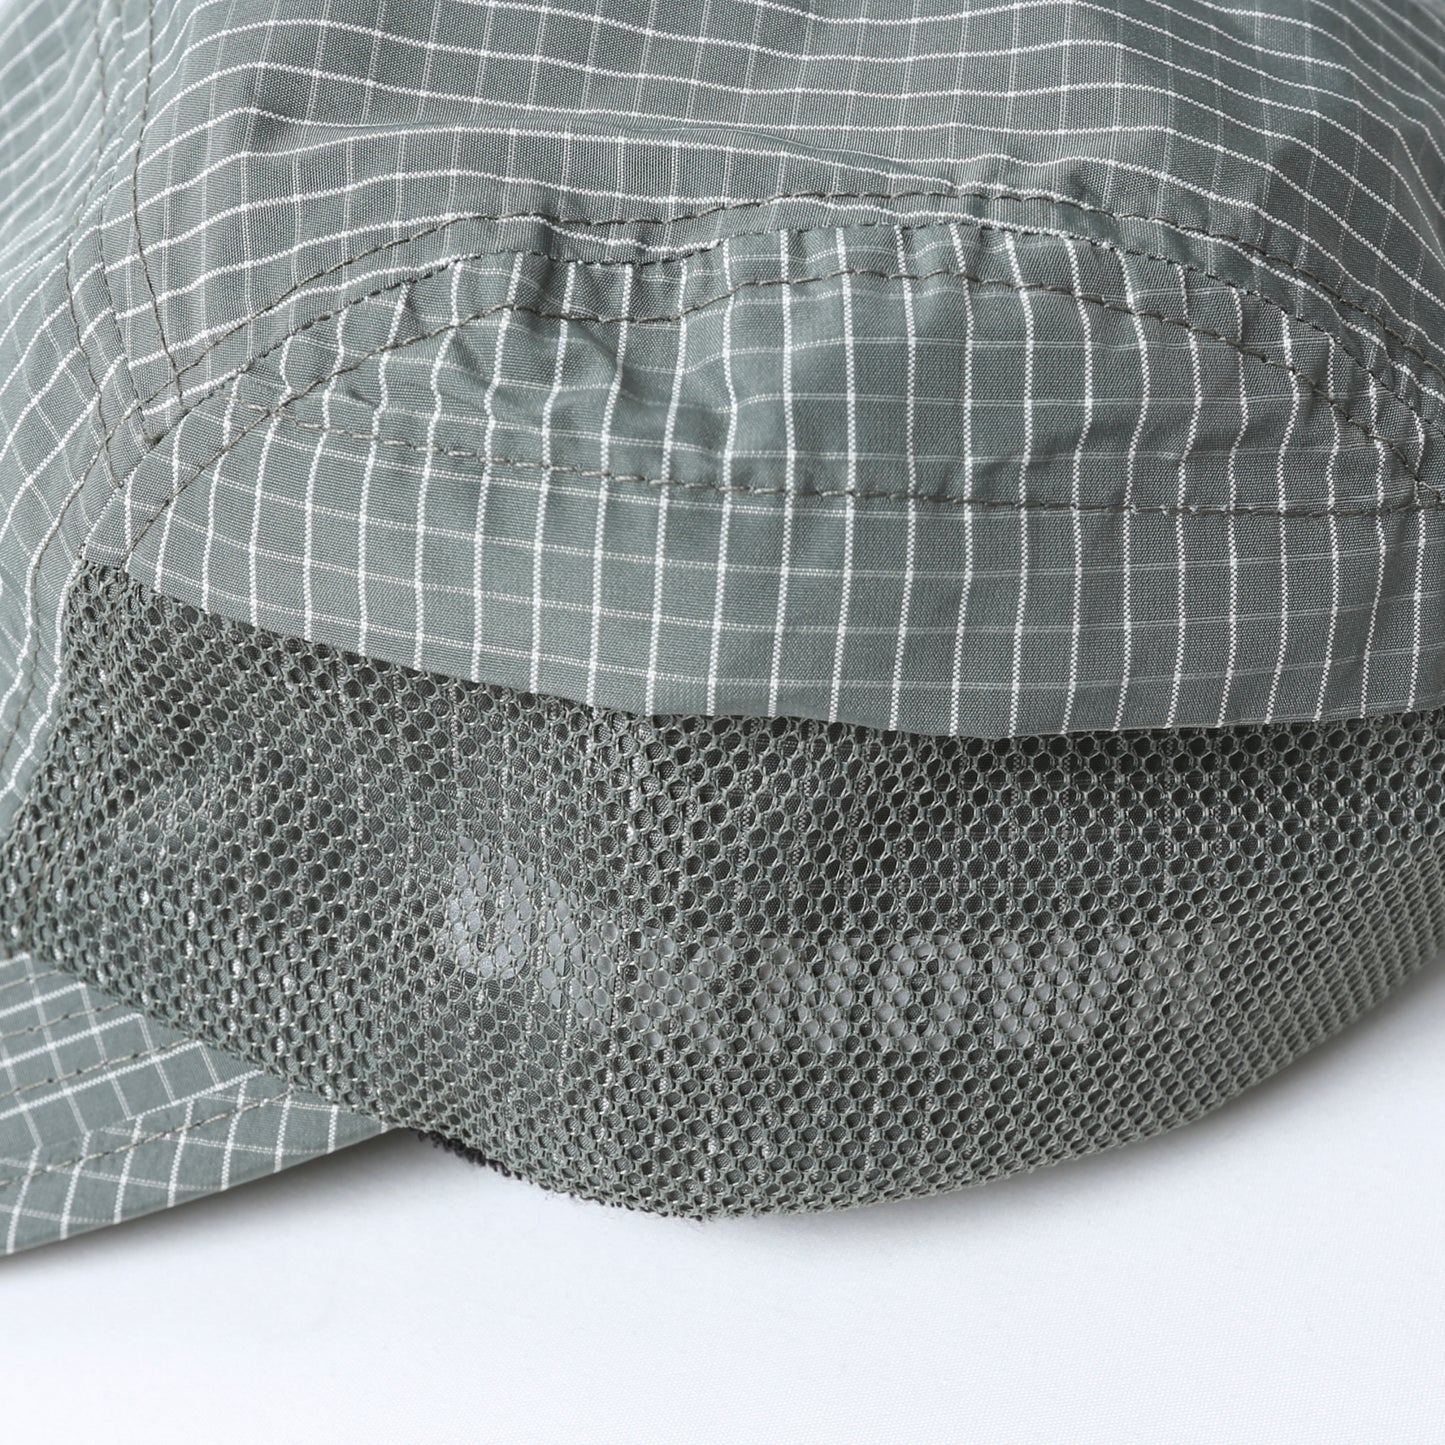 Liberaiders ®(リベレイダース) / GRID CLOTH CAP 70901 GREEN